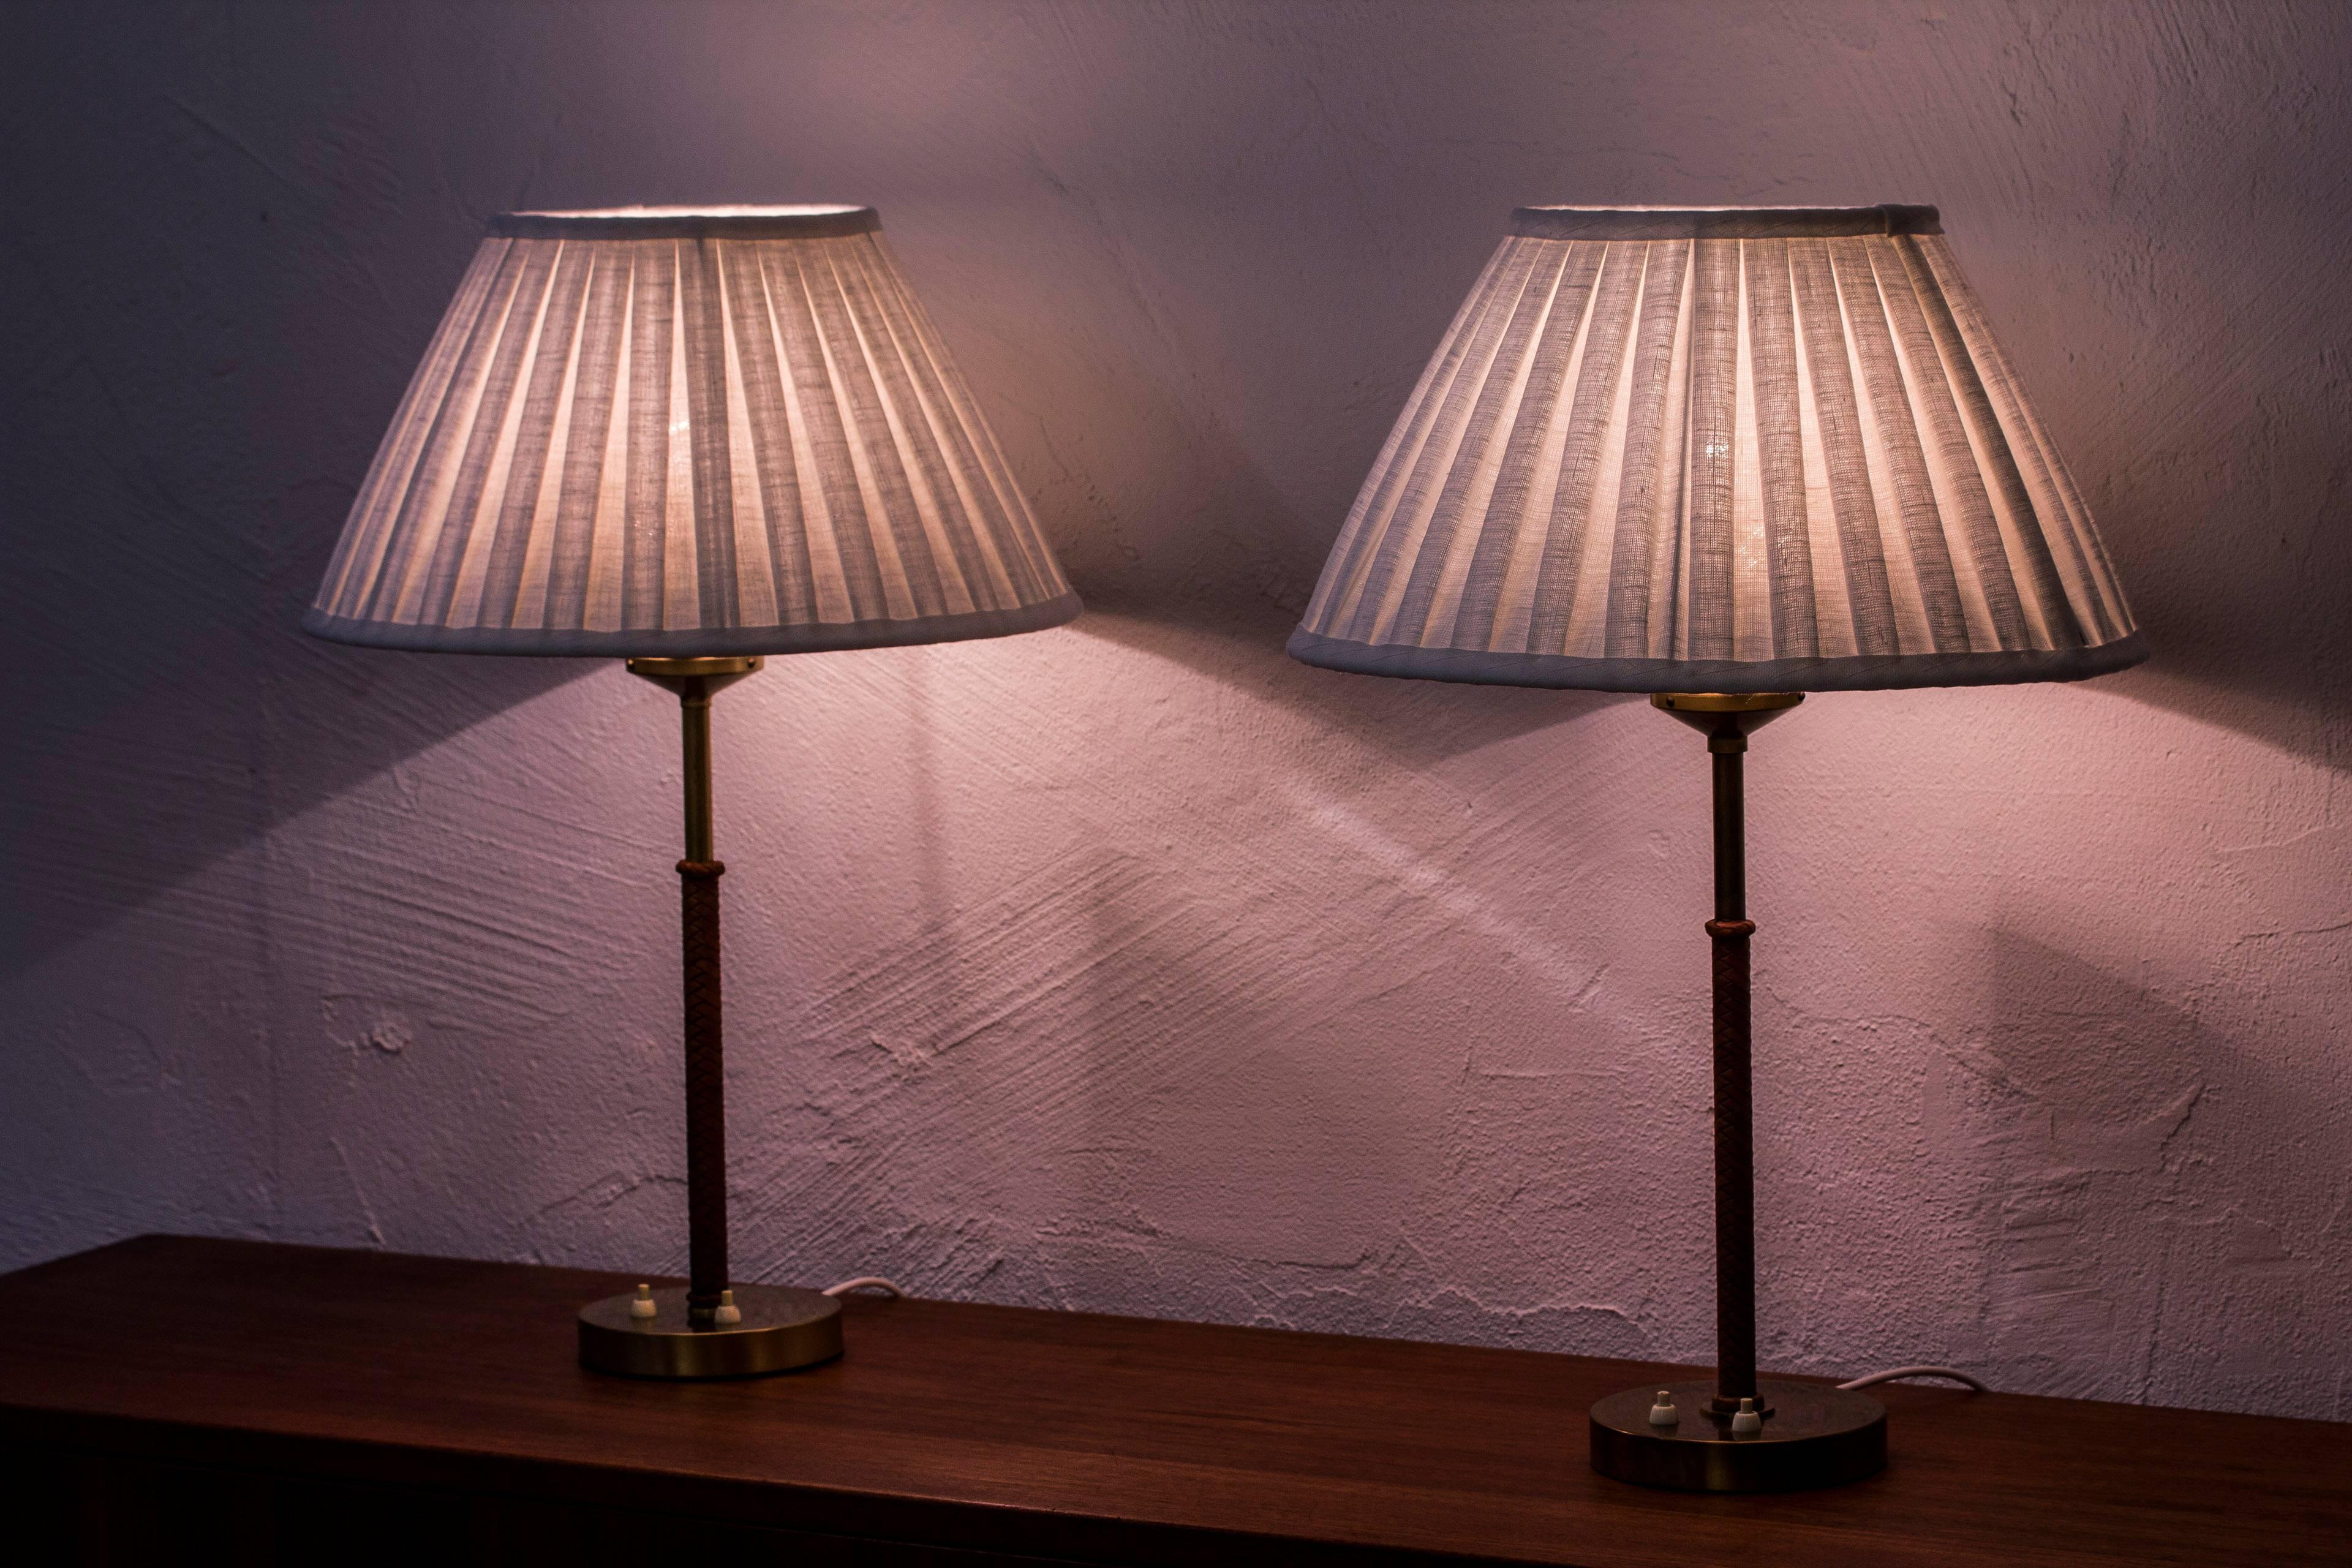 Pair of Table Lamps by Åke Hultgren for Nordiska Kompaniet Nk, Sweden 1